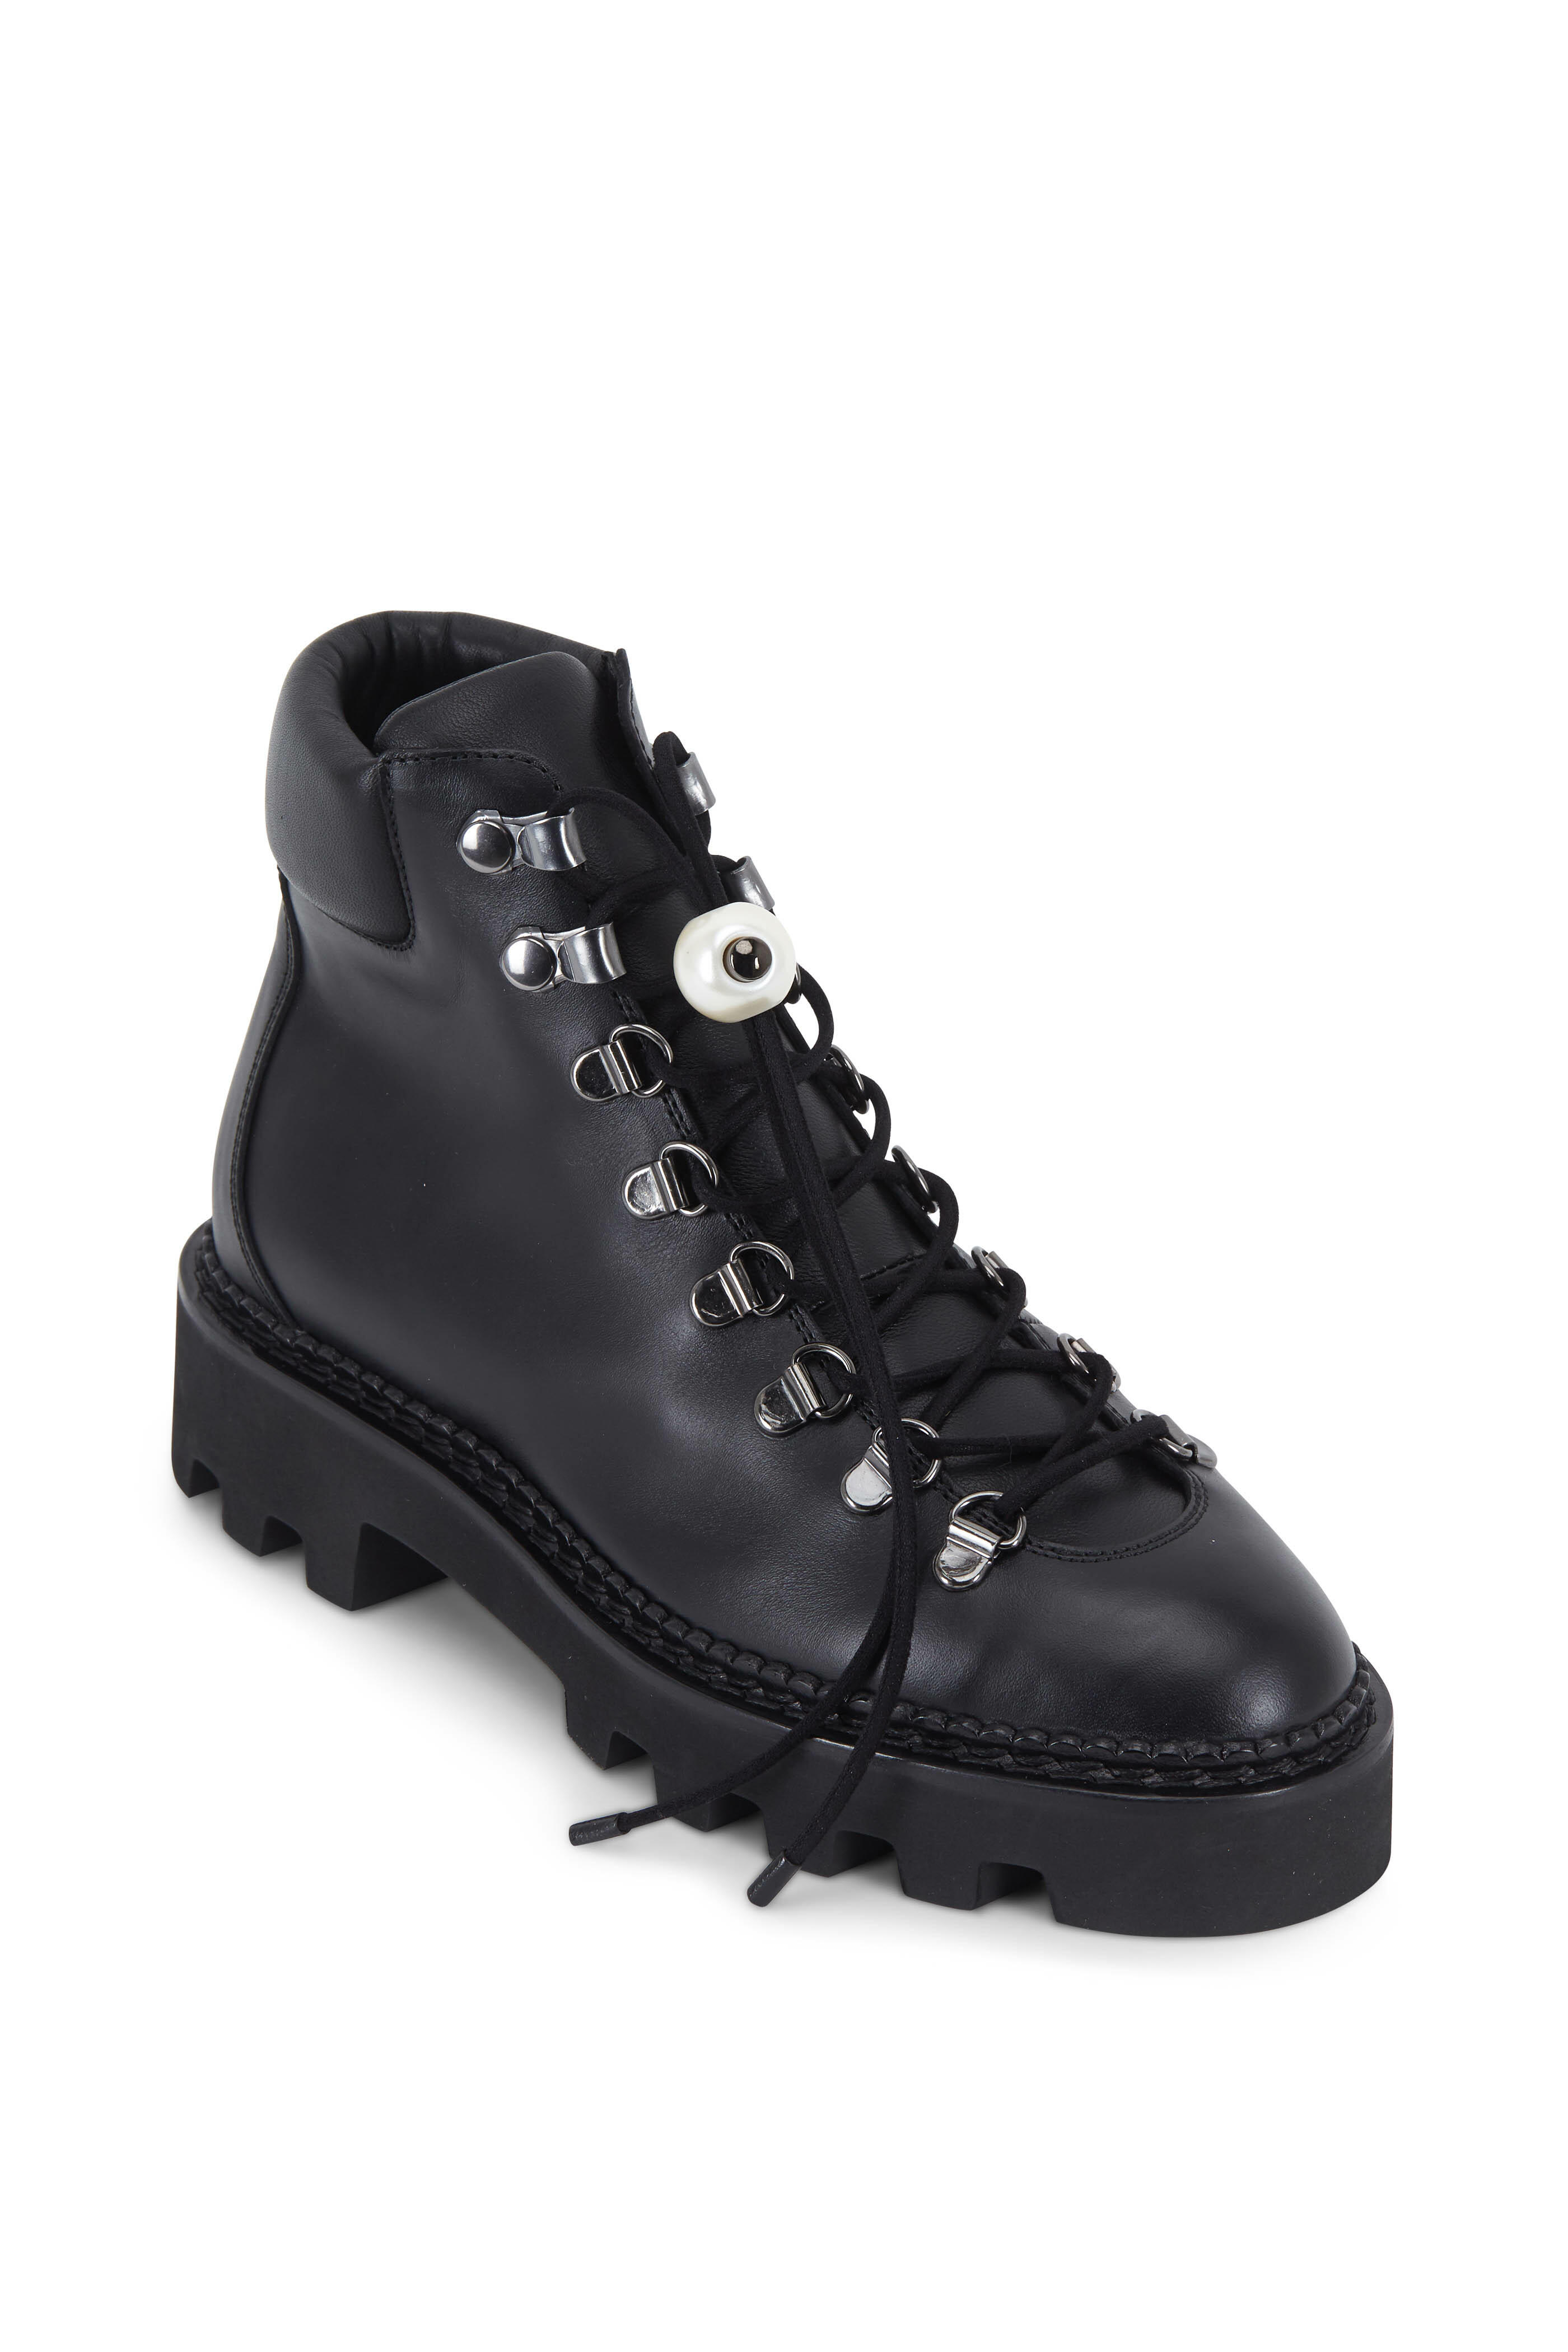 Nicholas Kirkwood black leather platform boots with pearl